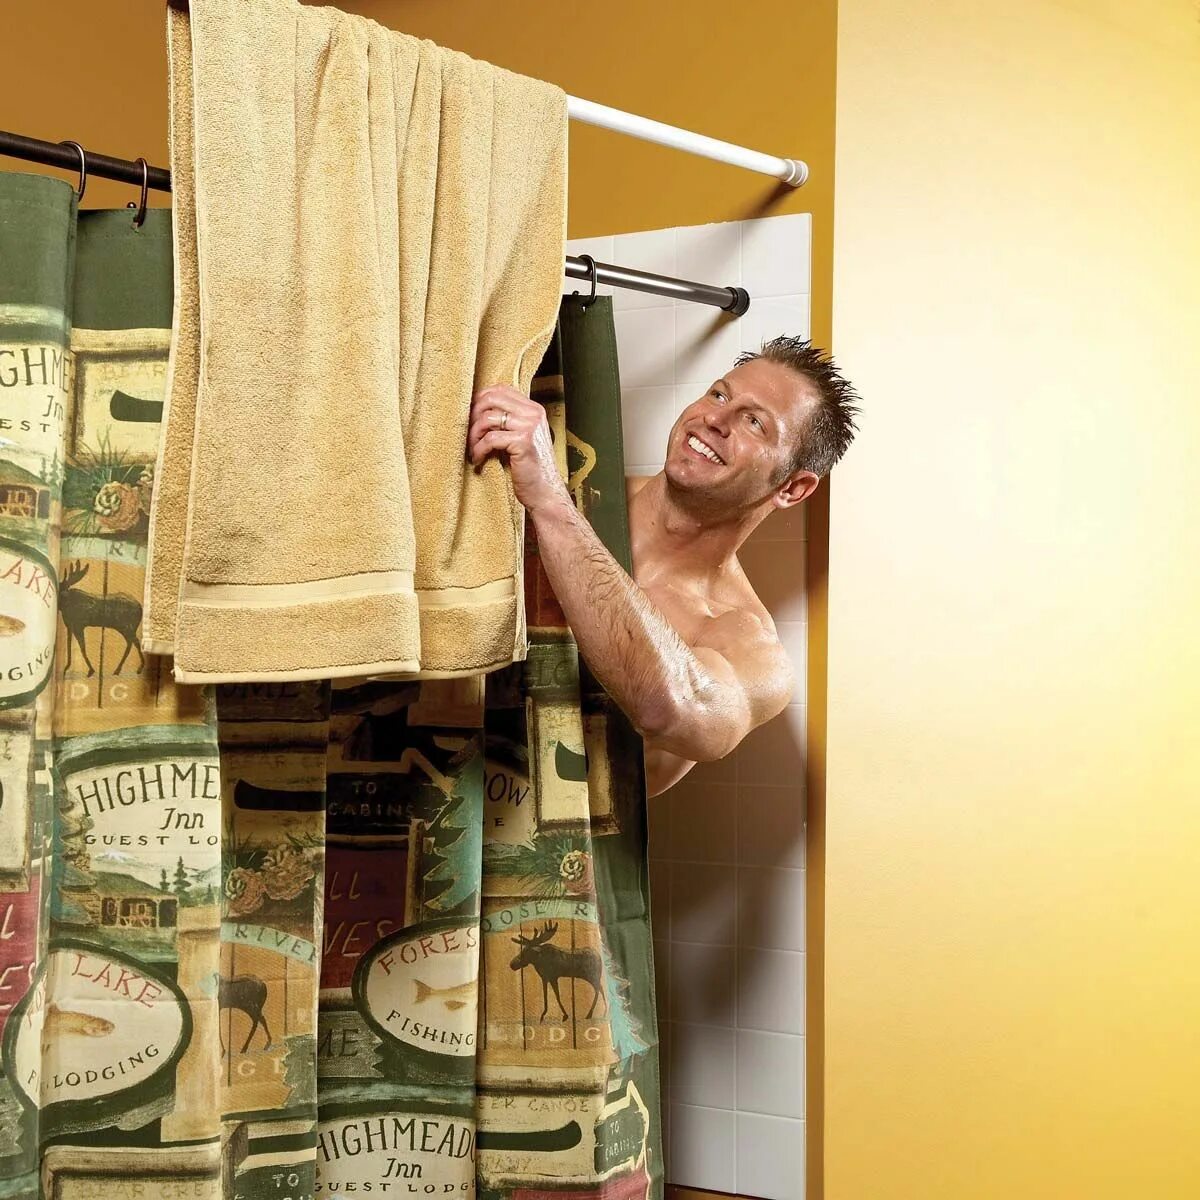 Аренда полотенец. Мужчина в ванной в полотенце. Душевая полотенца. Грязное полотенце.